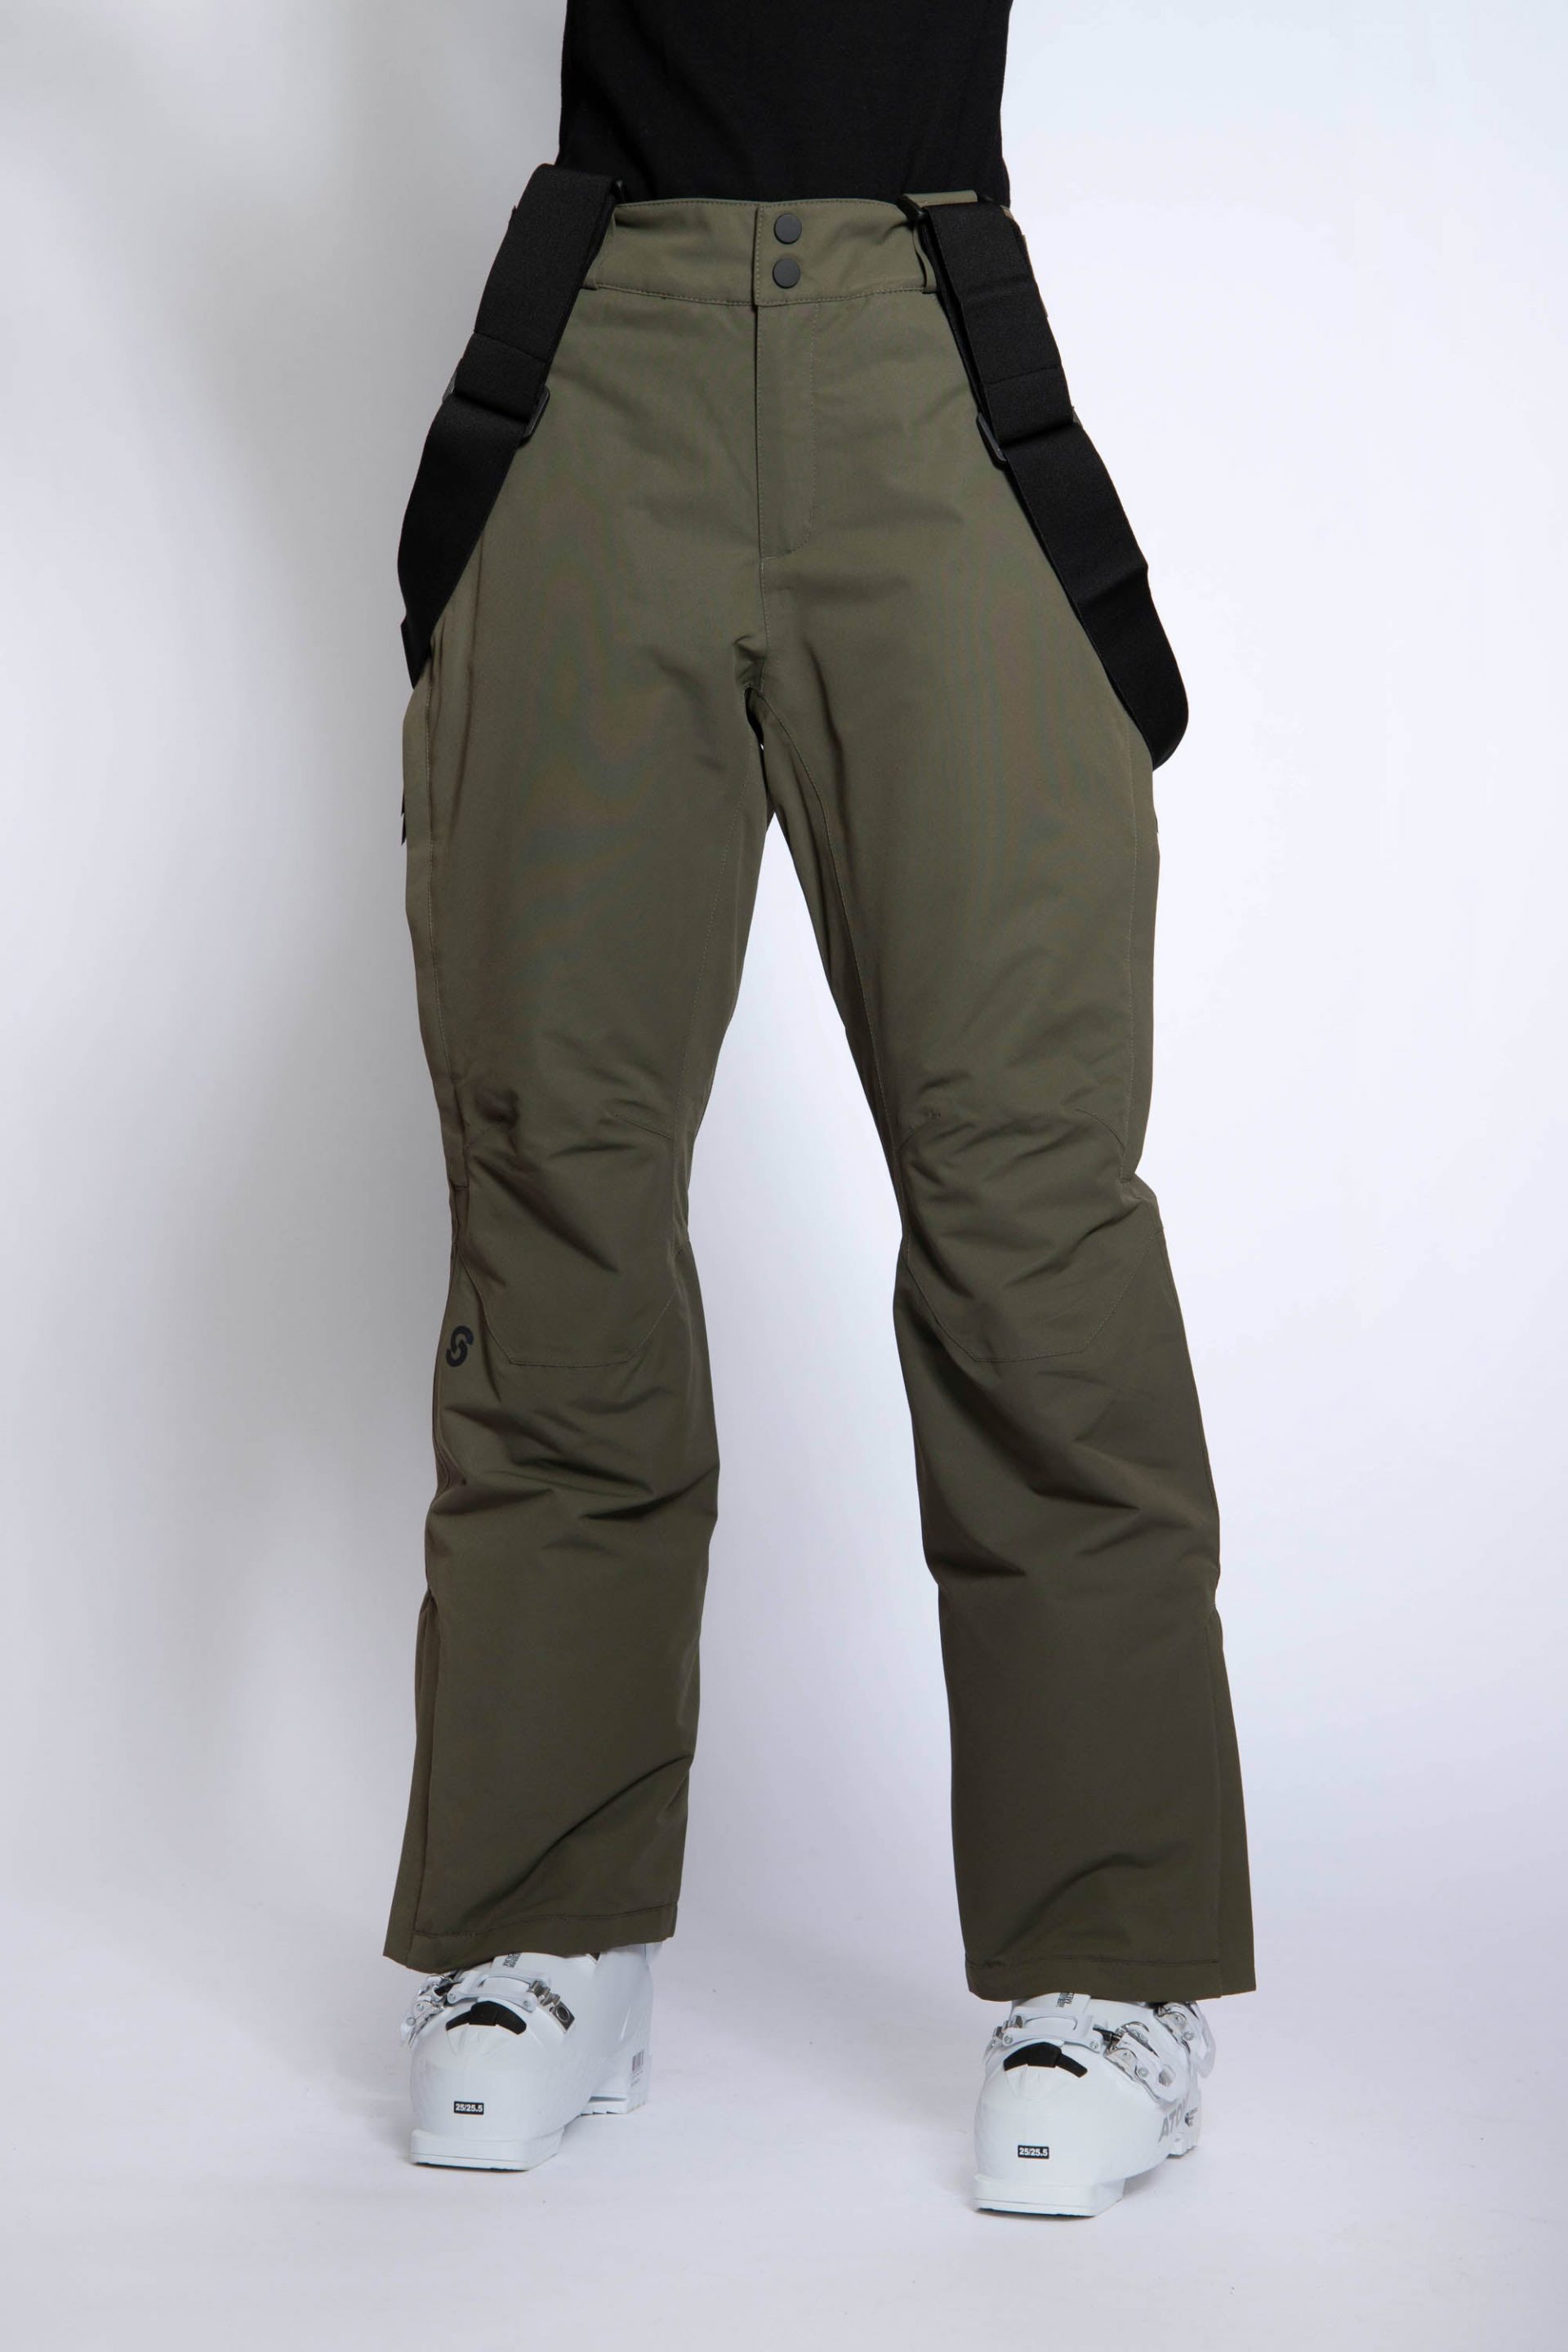 Women's Size Medium Snow Sport Waterproof Pants - All in Motion Olive Green